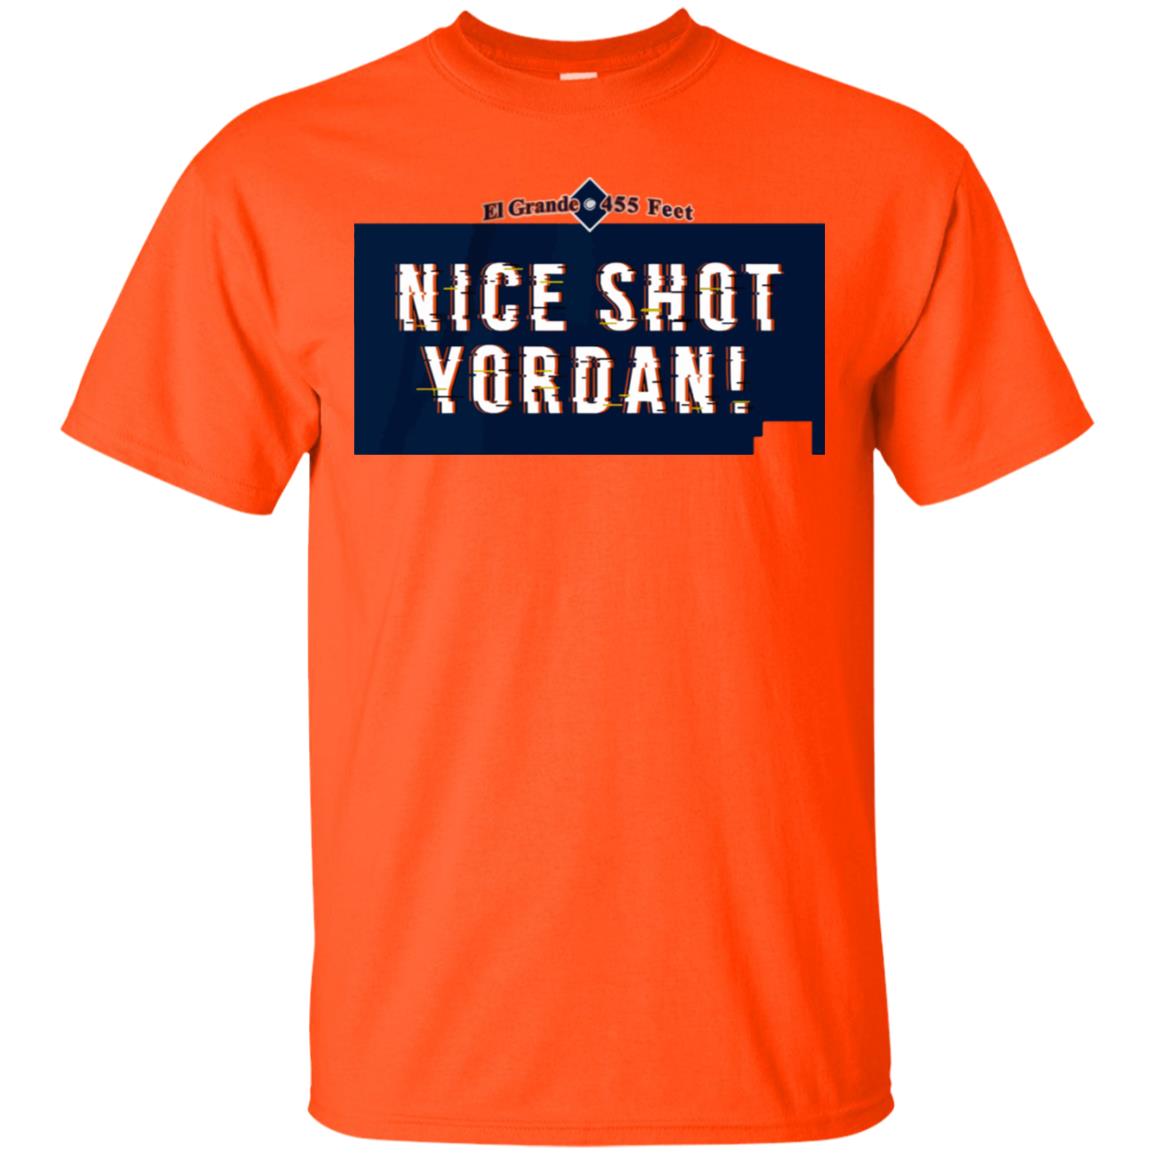 Yordan Alvarez Shirt - Nice Shot Yordan Shirt, Houston, MLBPA El Grande 455  feet T-shirt Tank Ls - Q-Finder Trending Design T Shirt